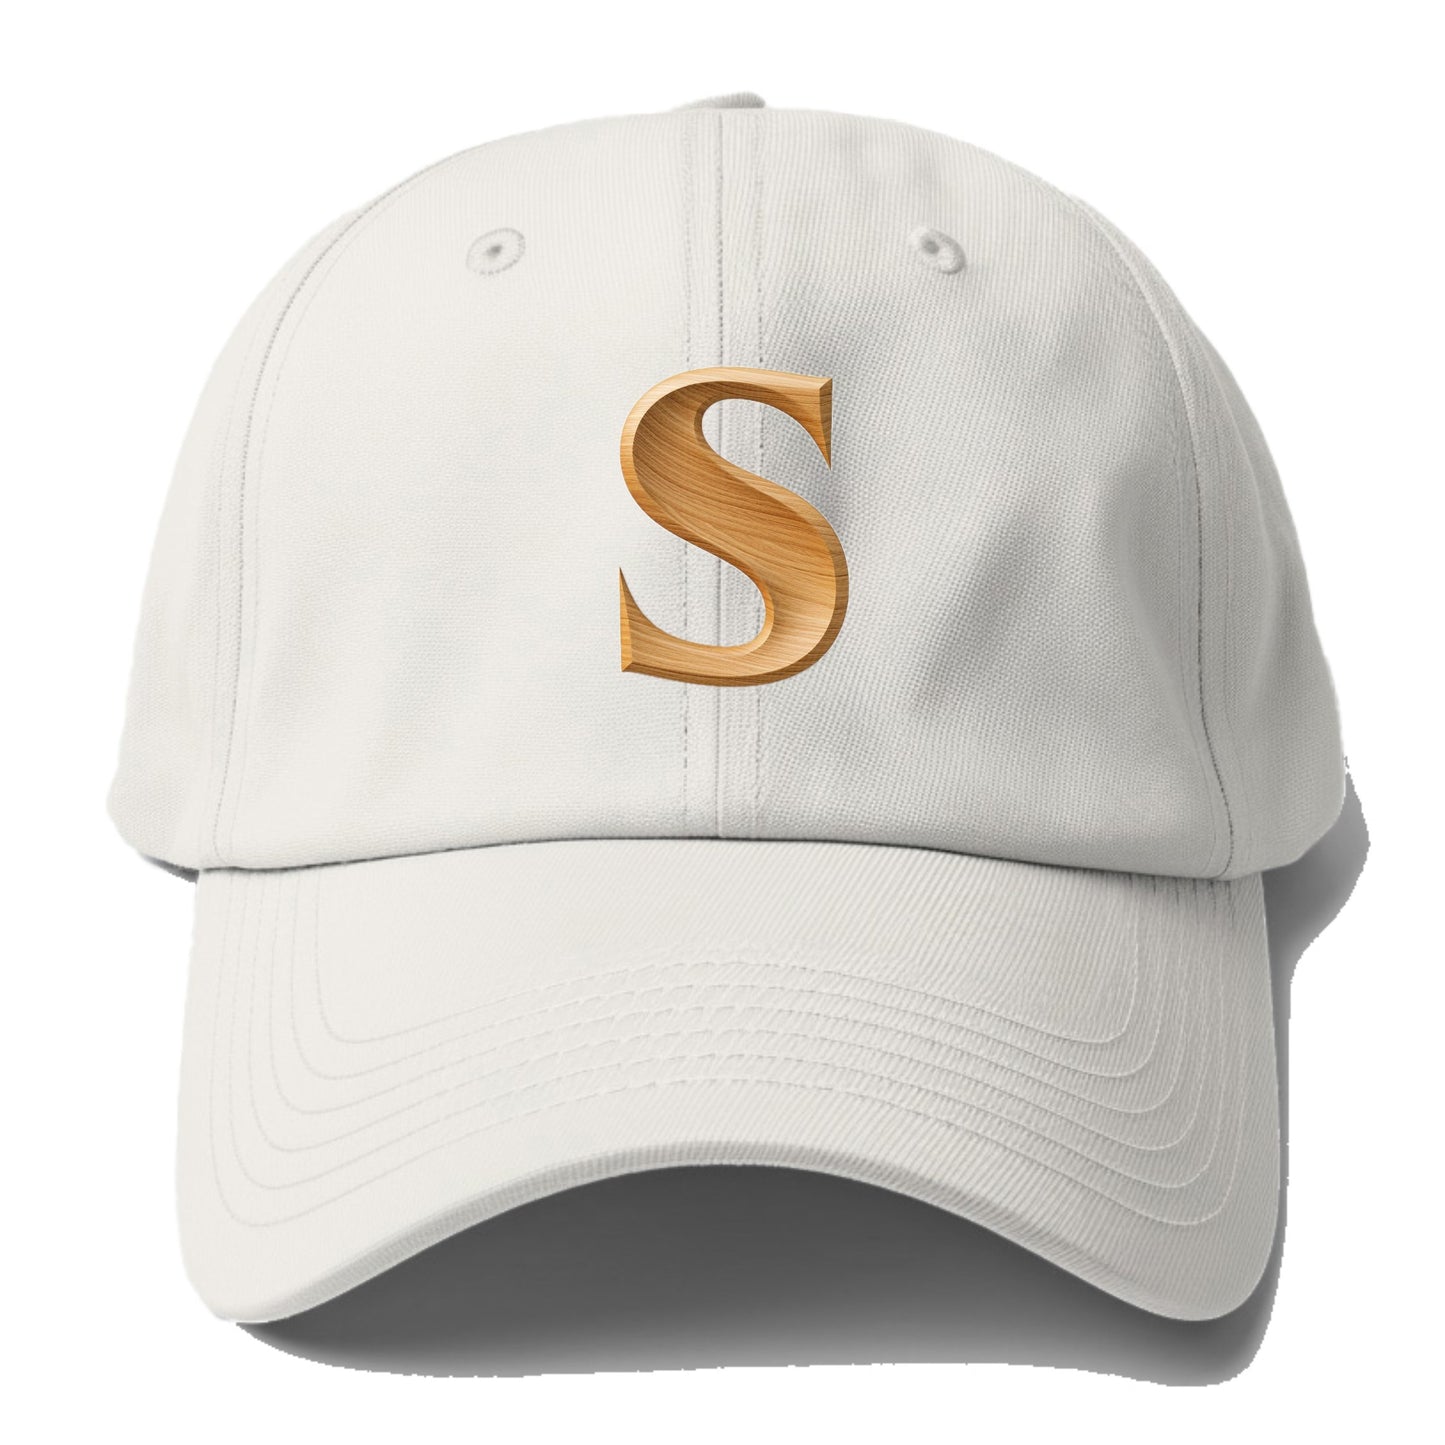 letter s Hat